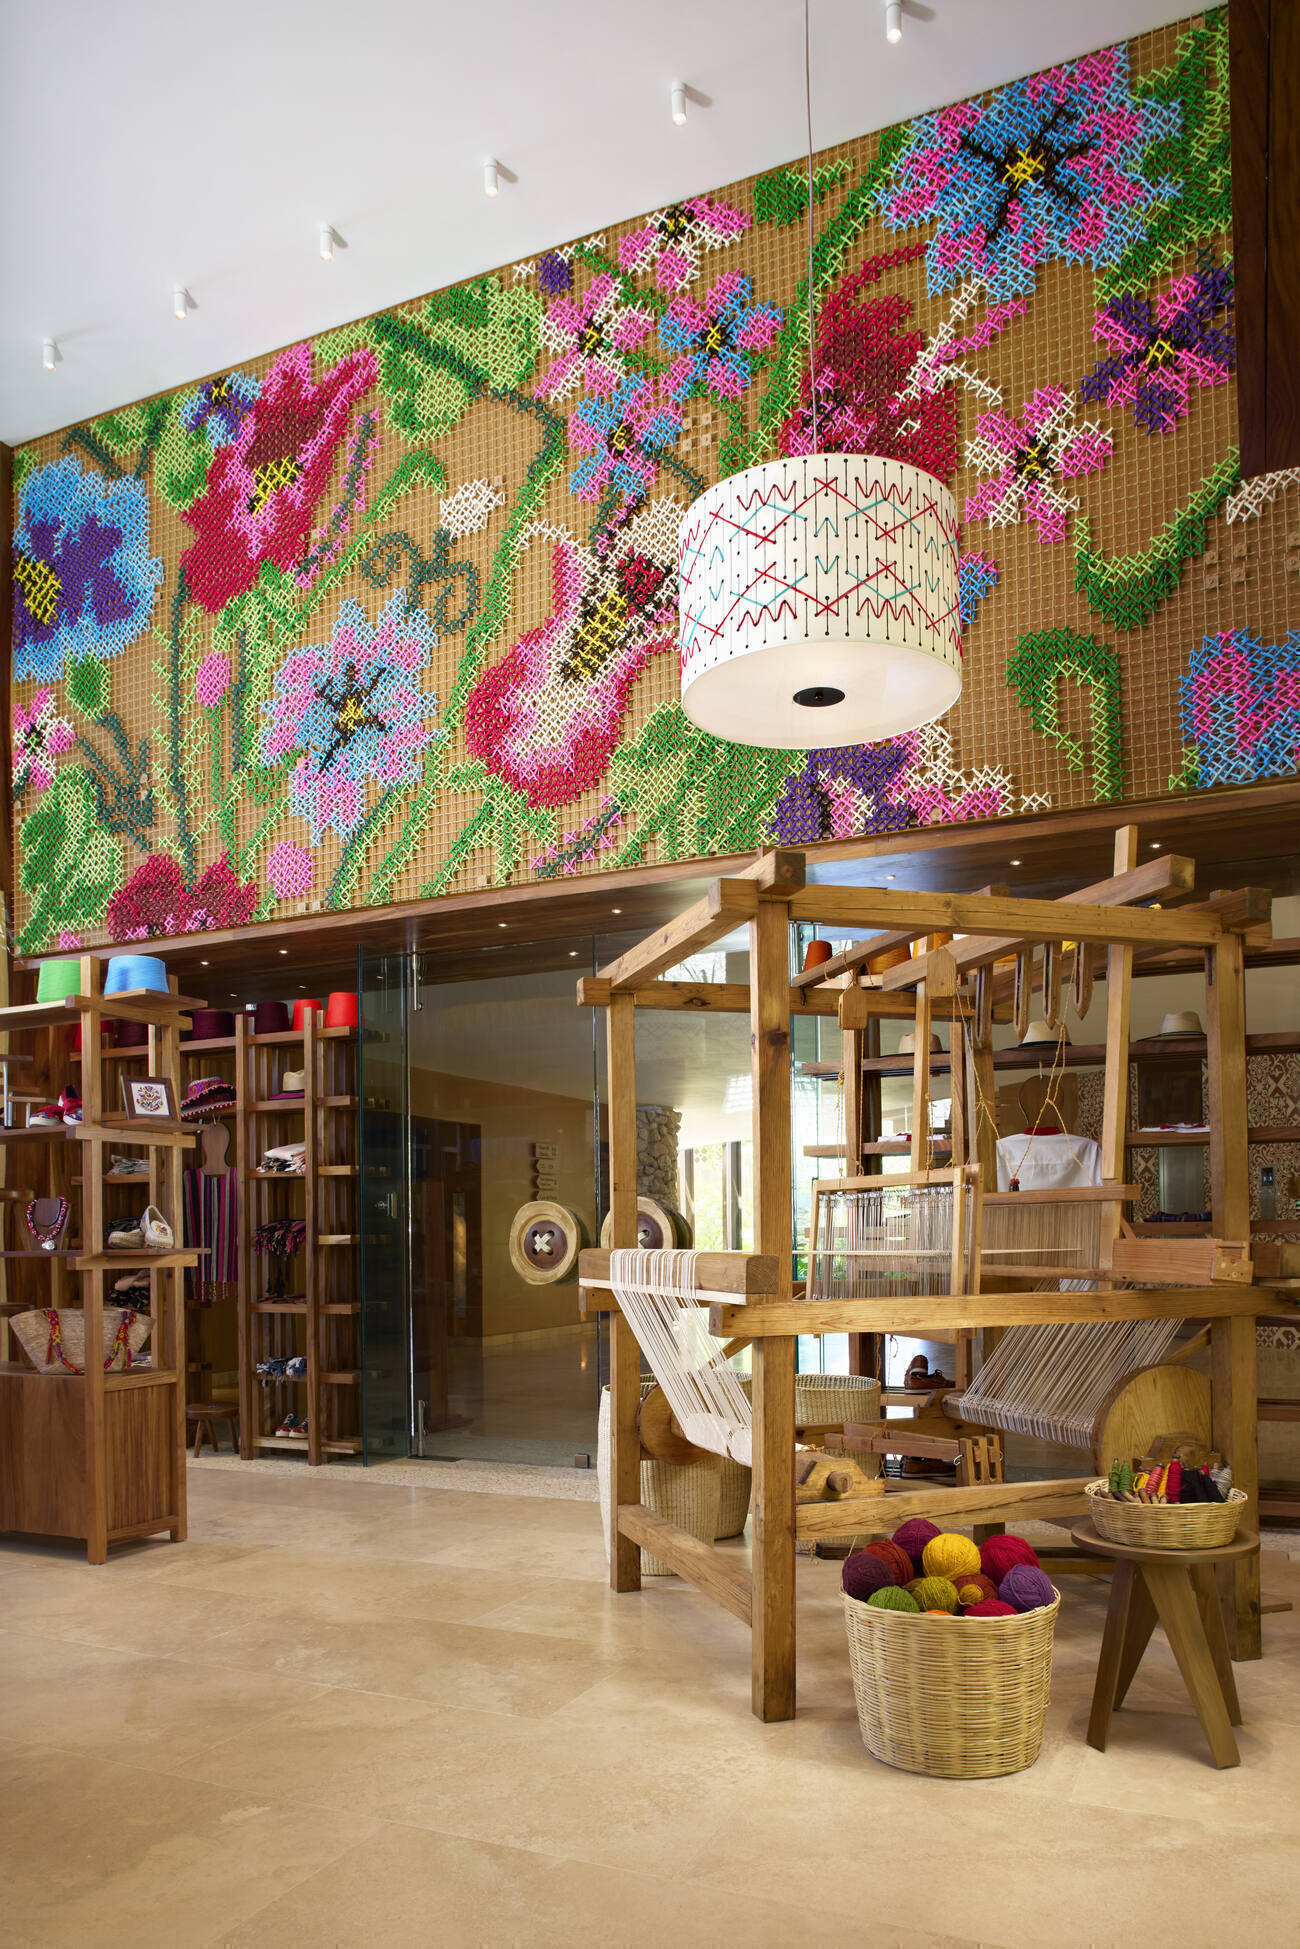 Room of yarn with yarn flower designs on the walls